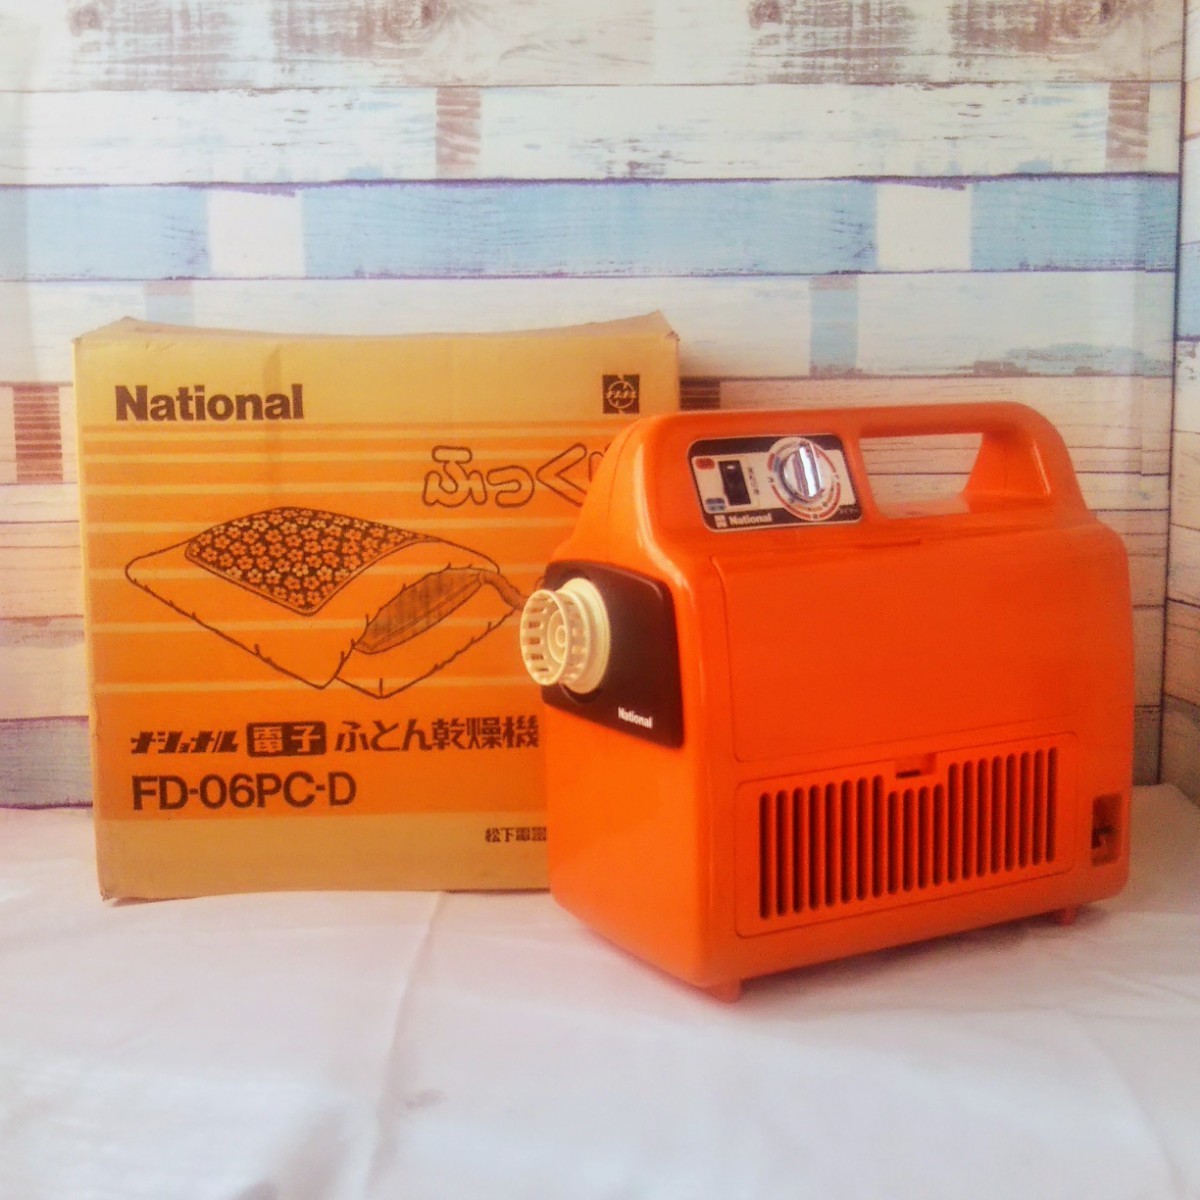  National электронный futon сушильная машина FD-06PC-D( orange ) Showa бытовая техника Showa Retro 